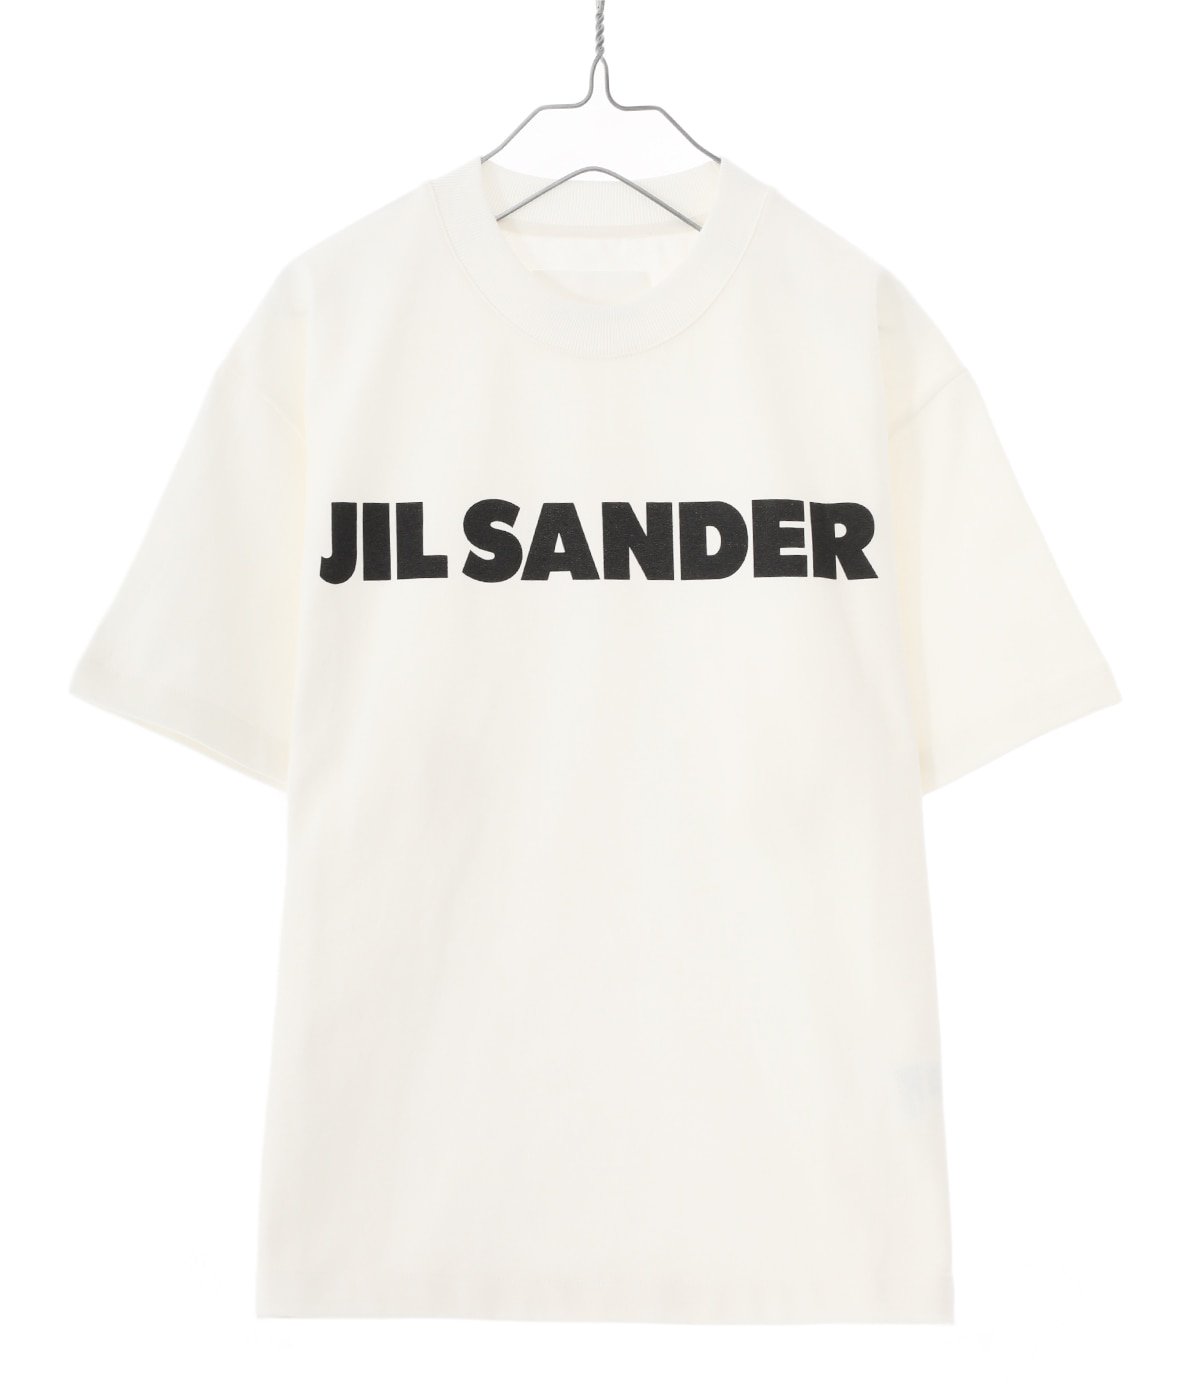 jil sander tシャツ